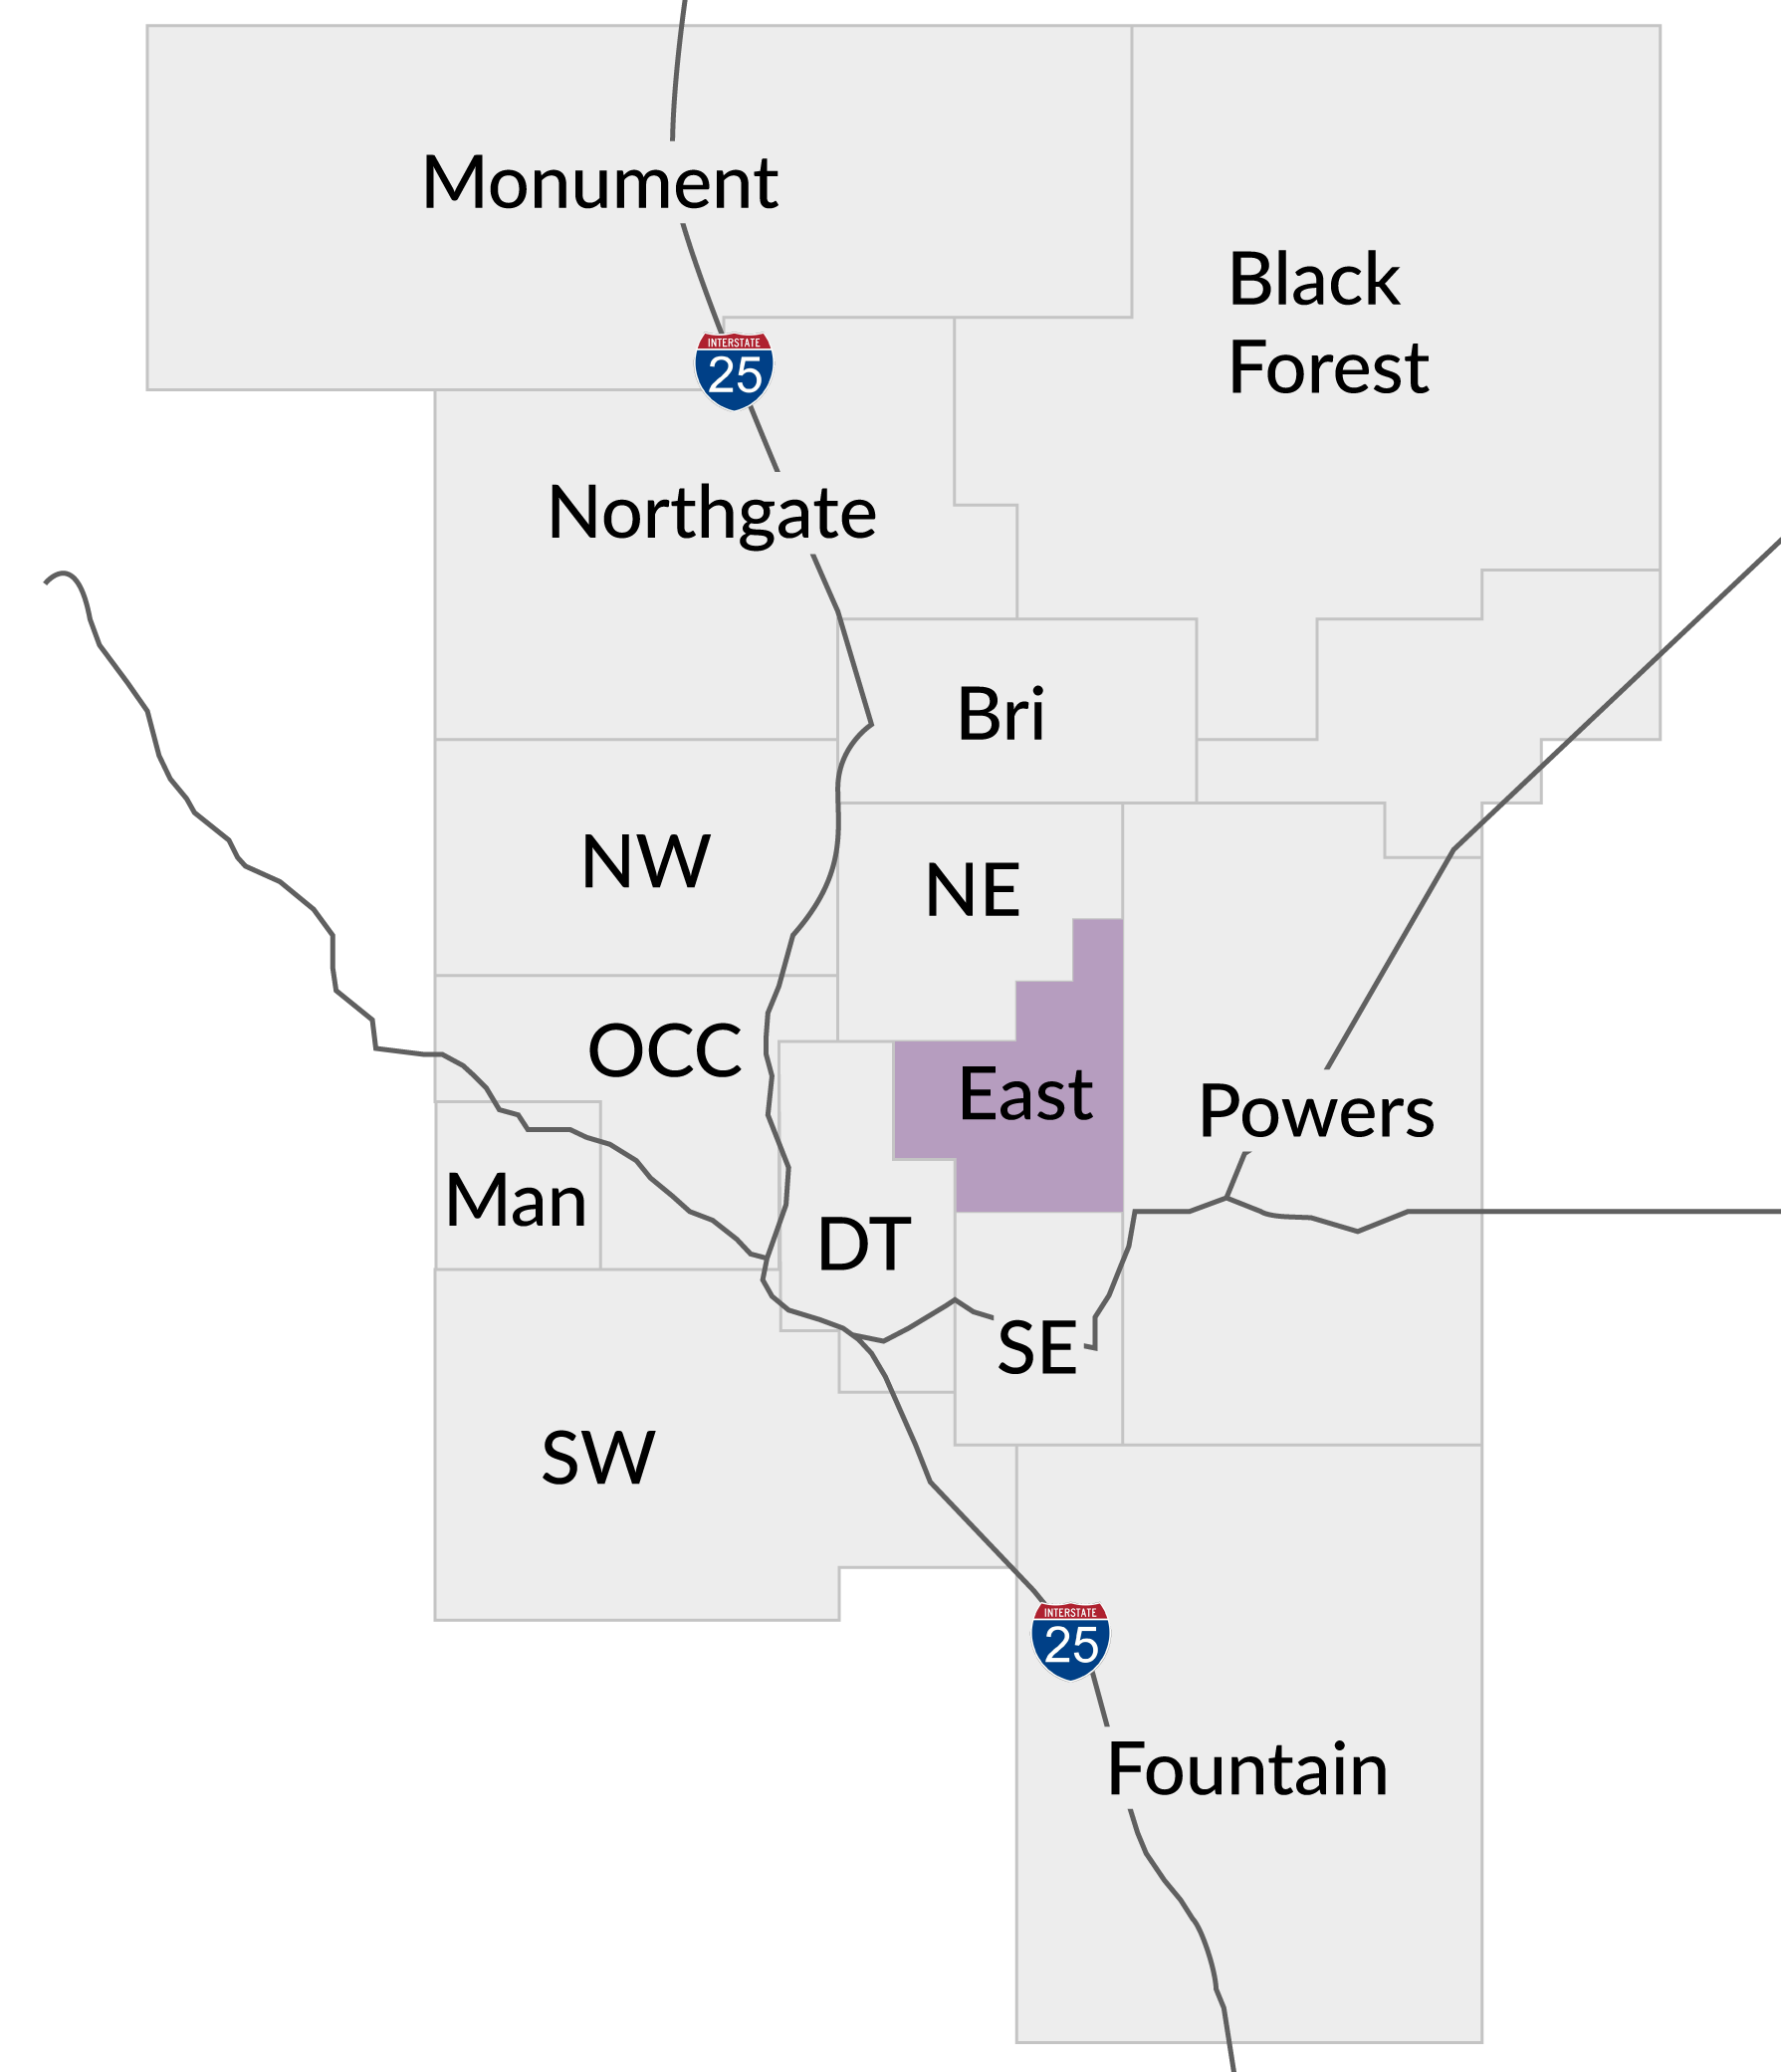 East_map